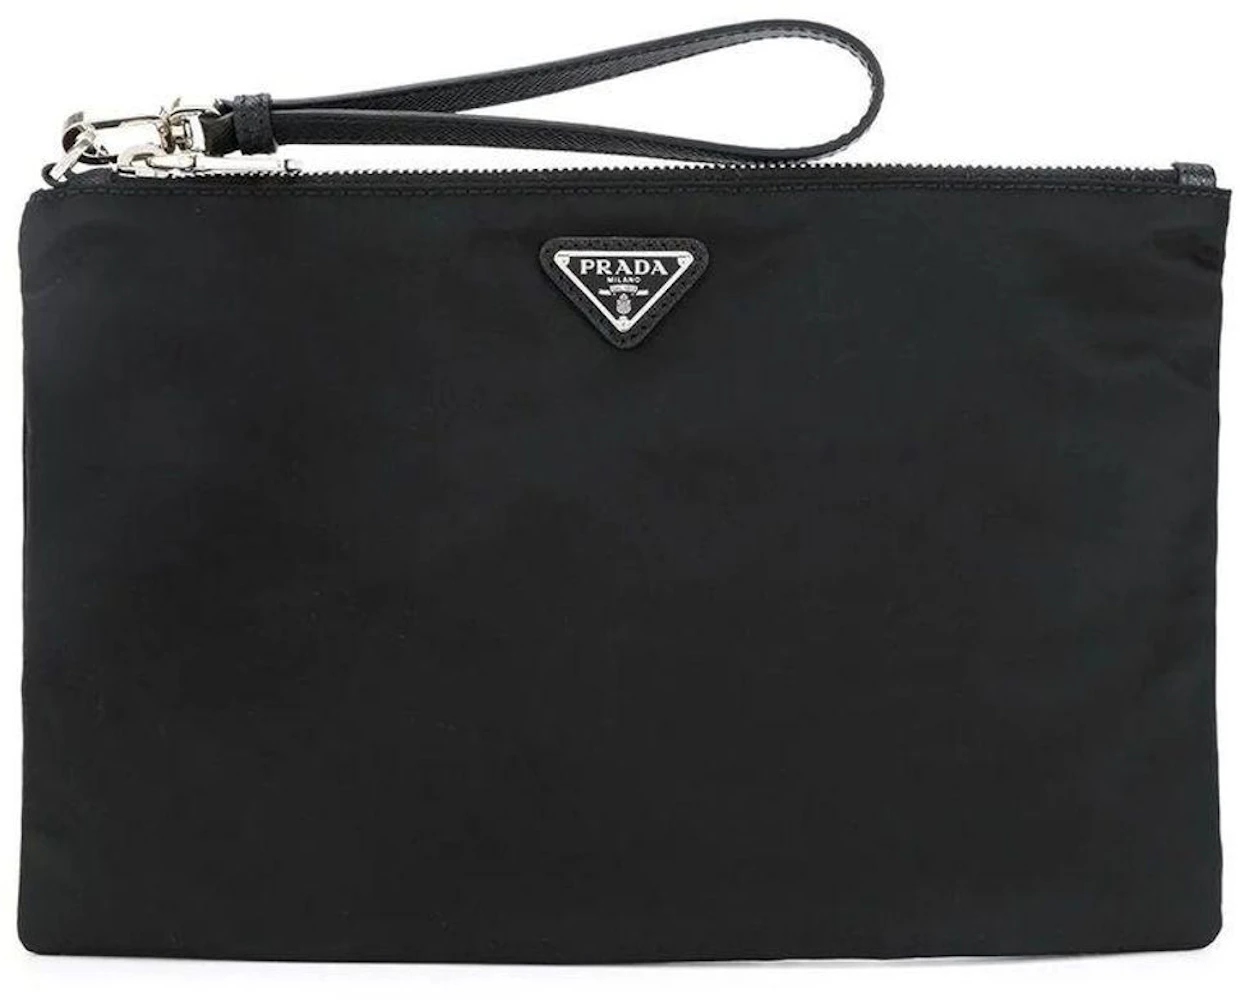 Prada Nylon Clutch Bag Small Black in Nylon - GB